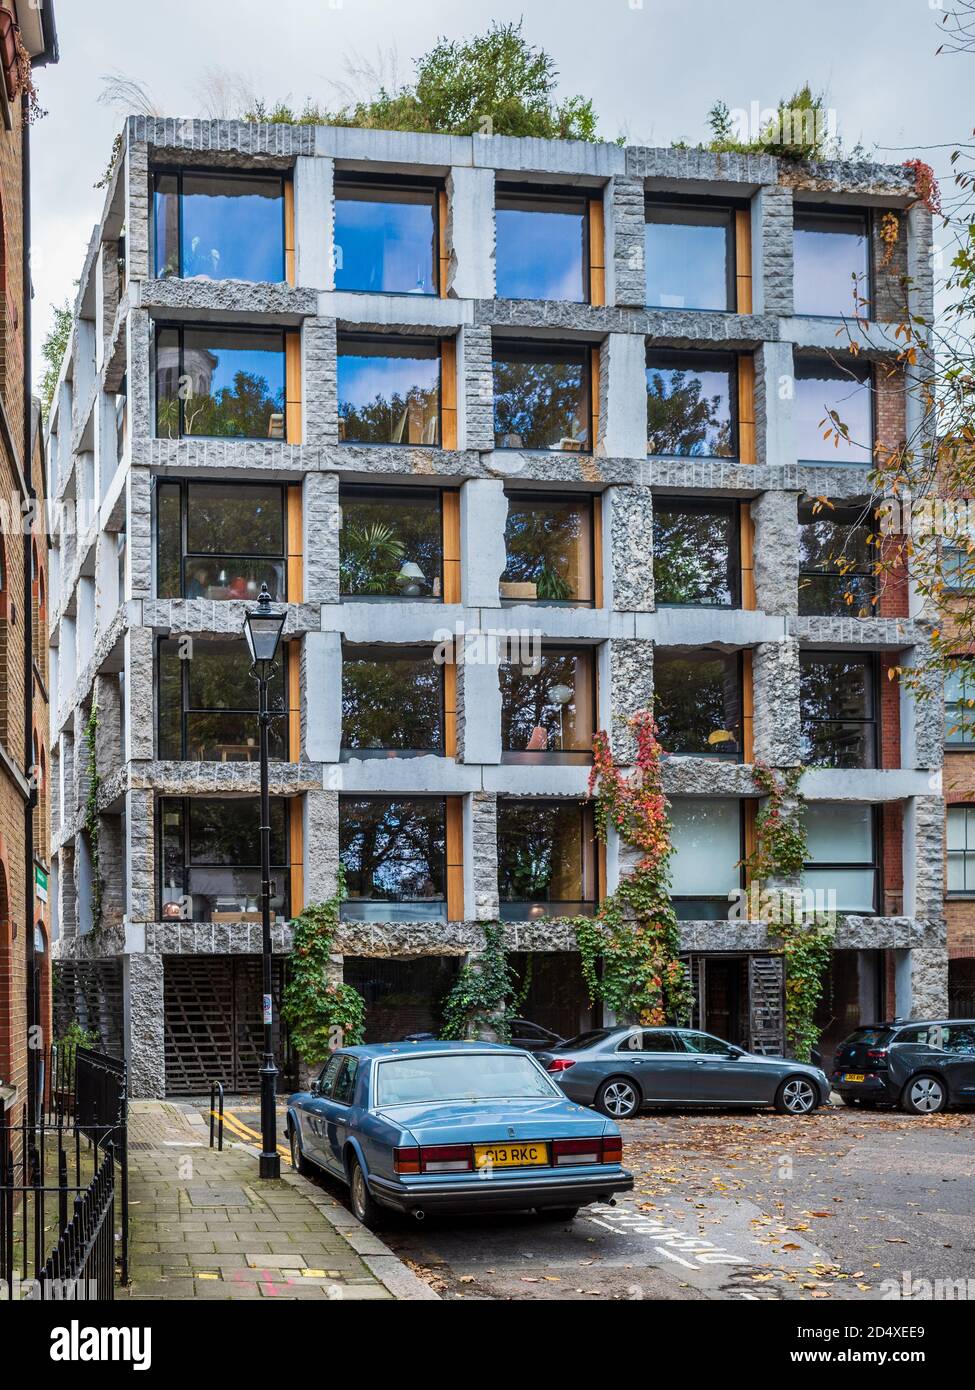 15 Clerkenwell Close London - controversial mixed use six storey building with a stone facade. Architect: Amin Taha 2017. RIBA National Awards 2017. Stock Photo